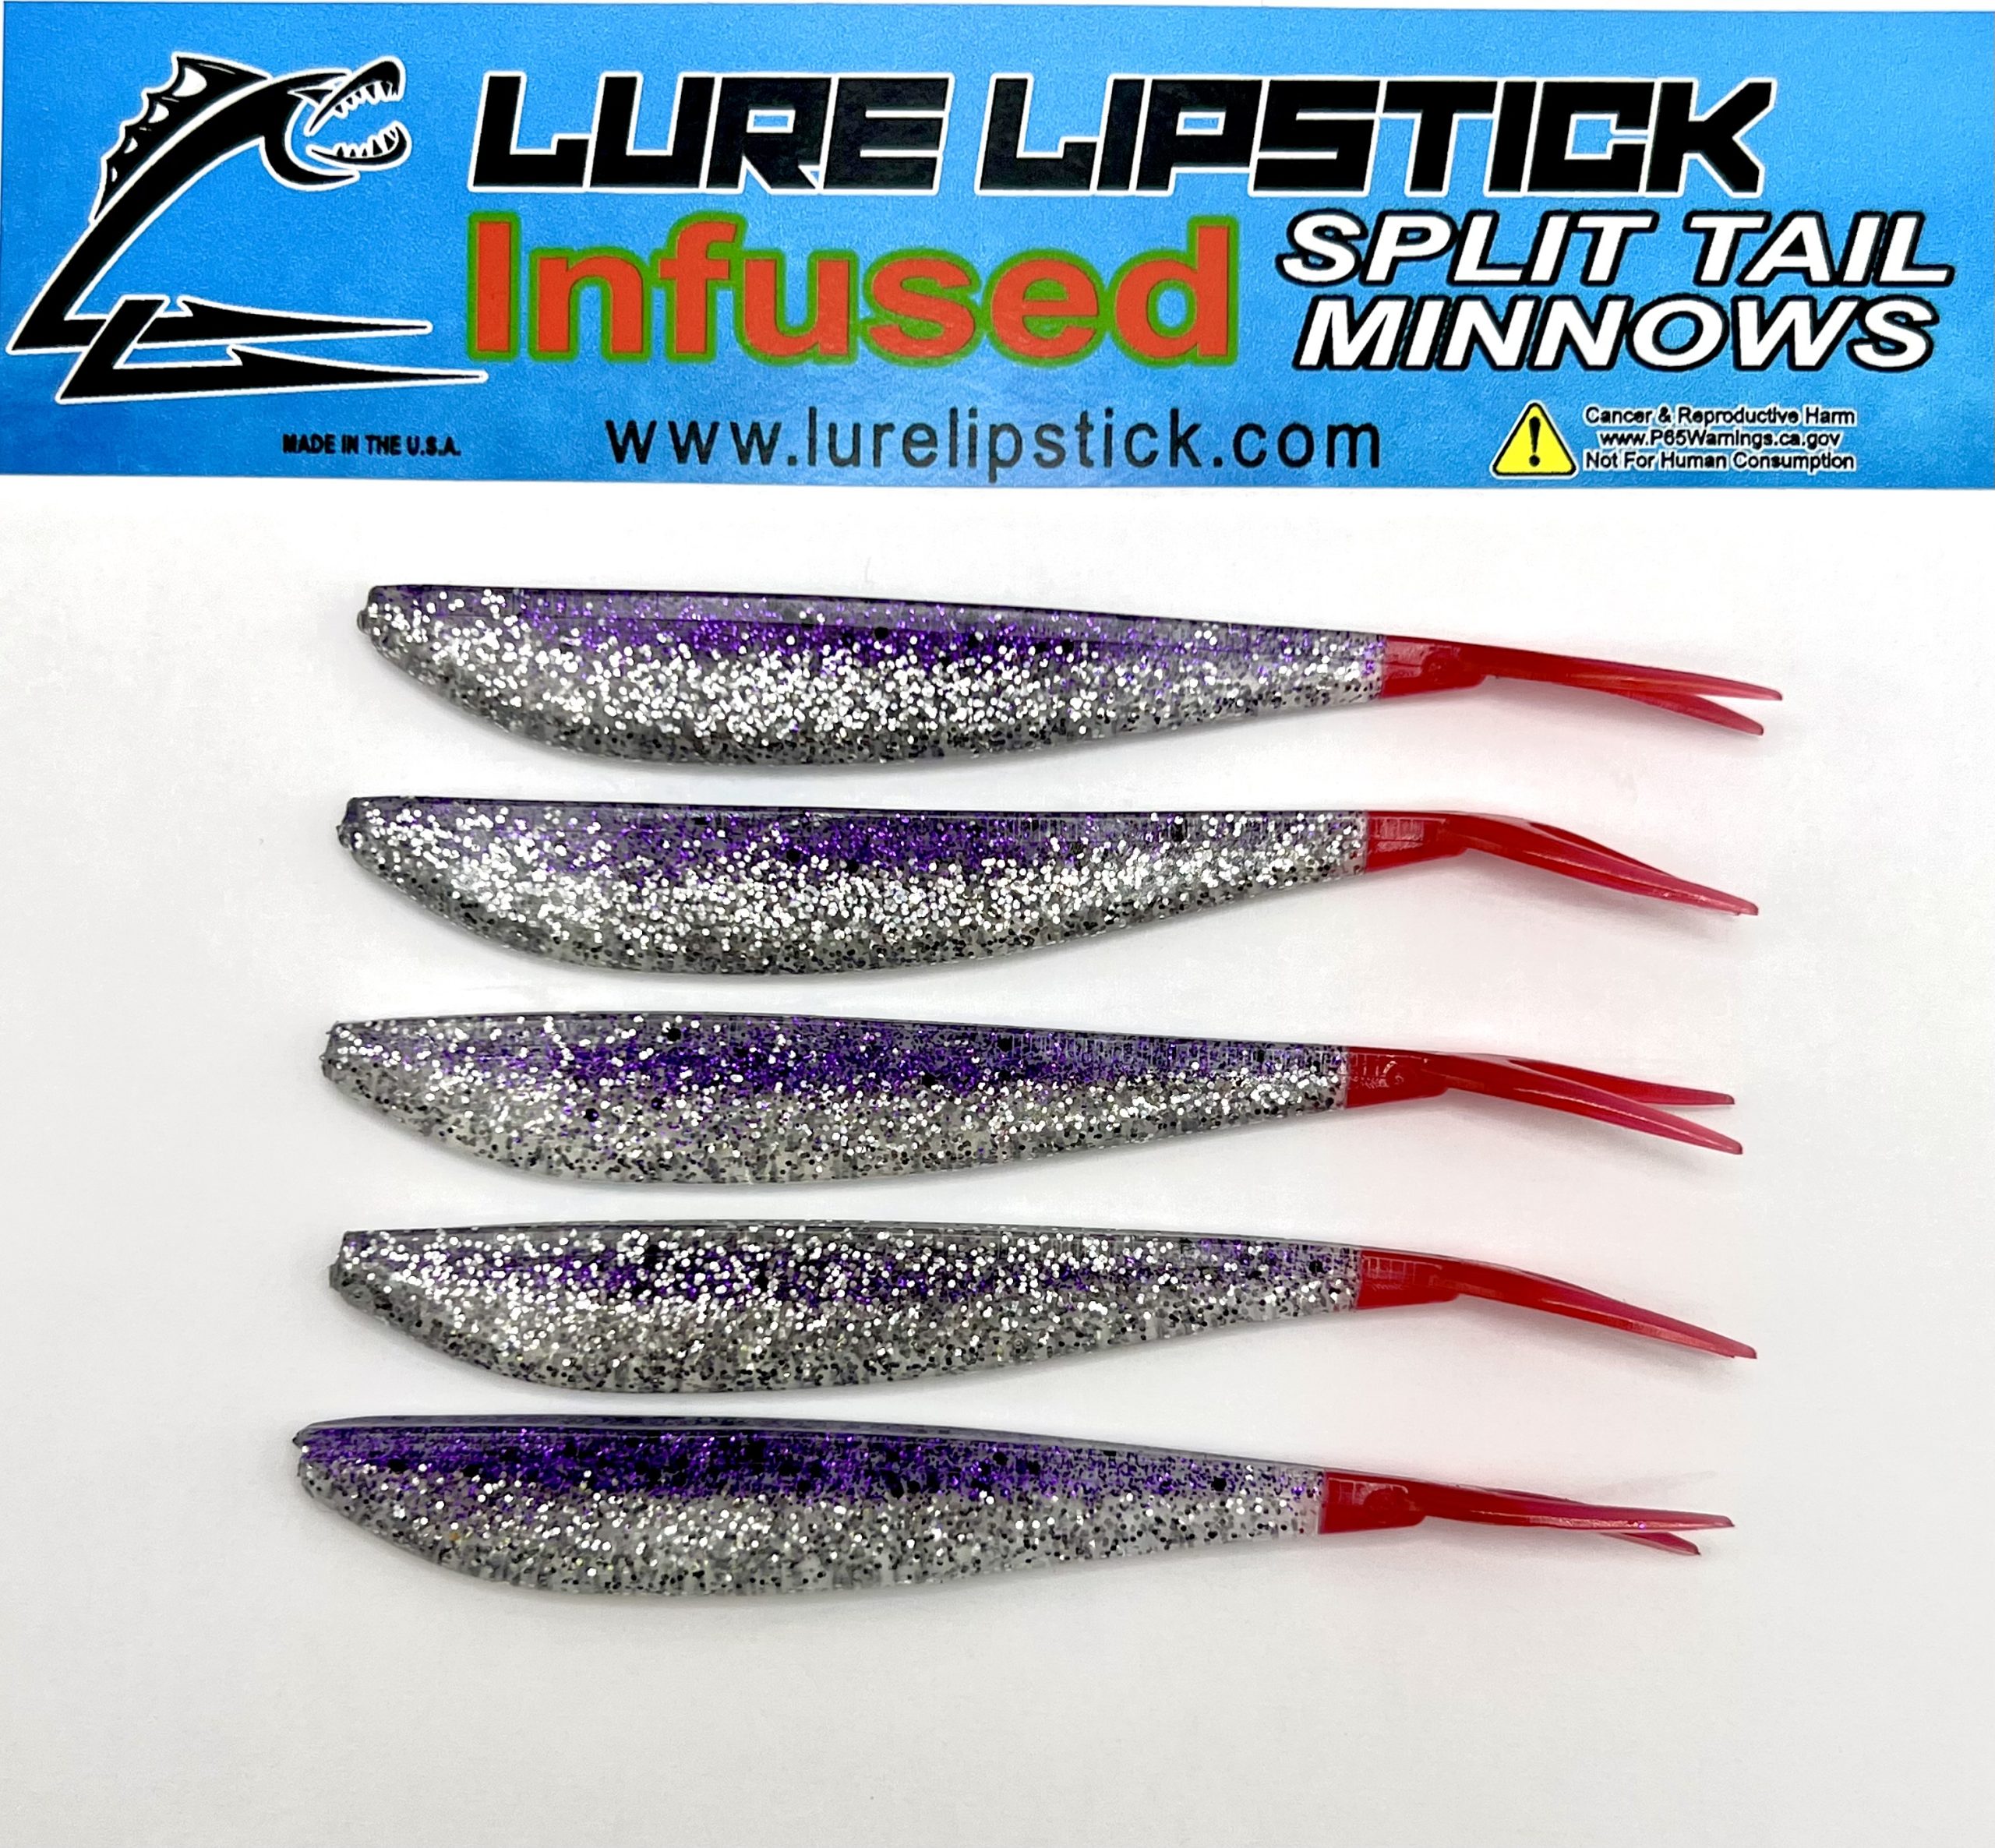 4in 5 Pack Custom Split Tail Minnows - Purple Ice Red Tail